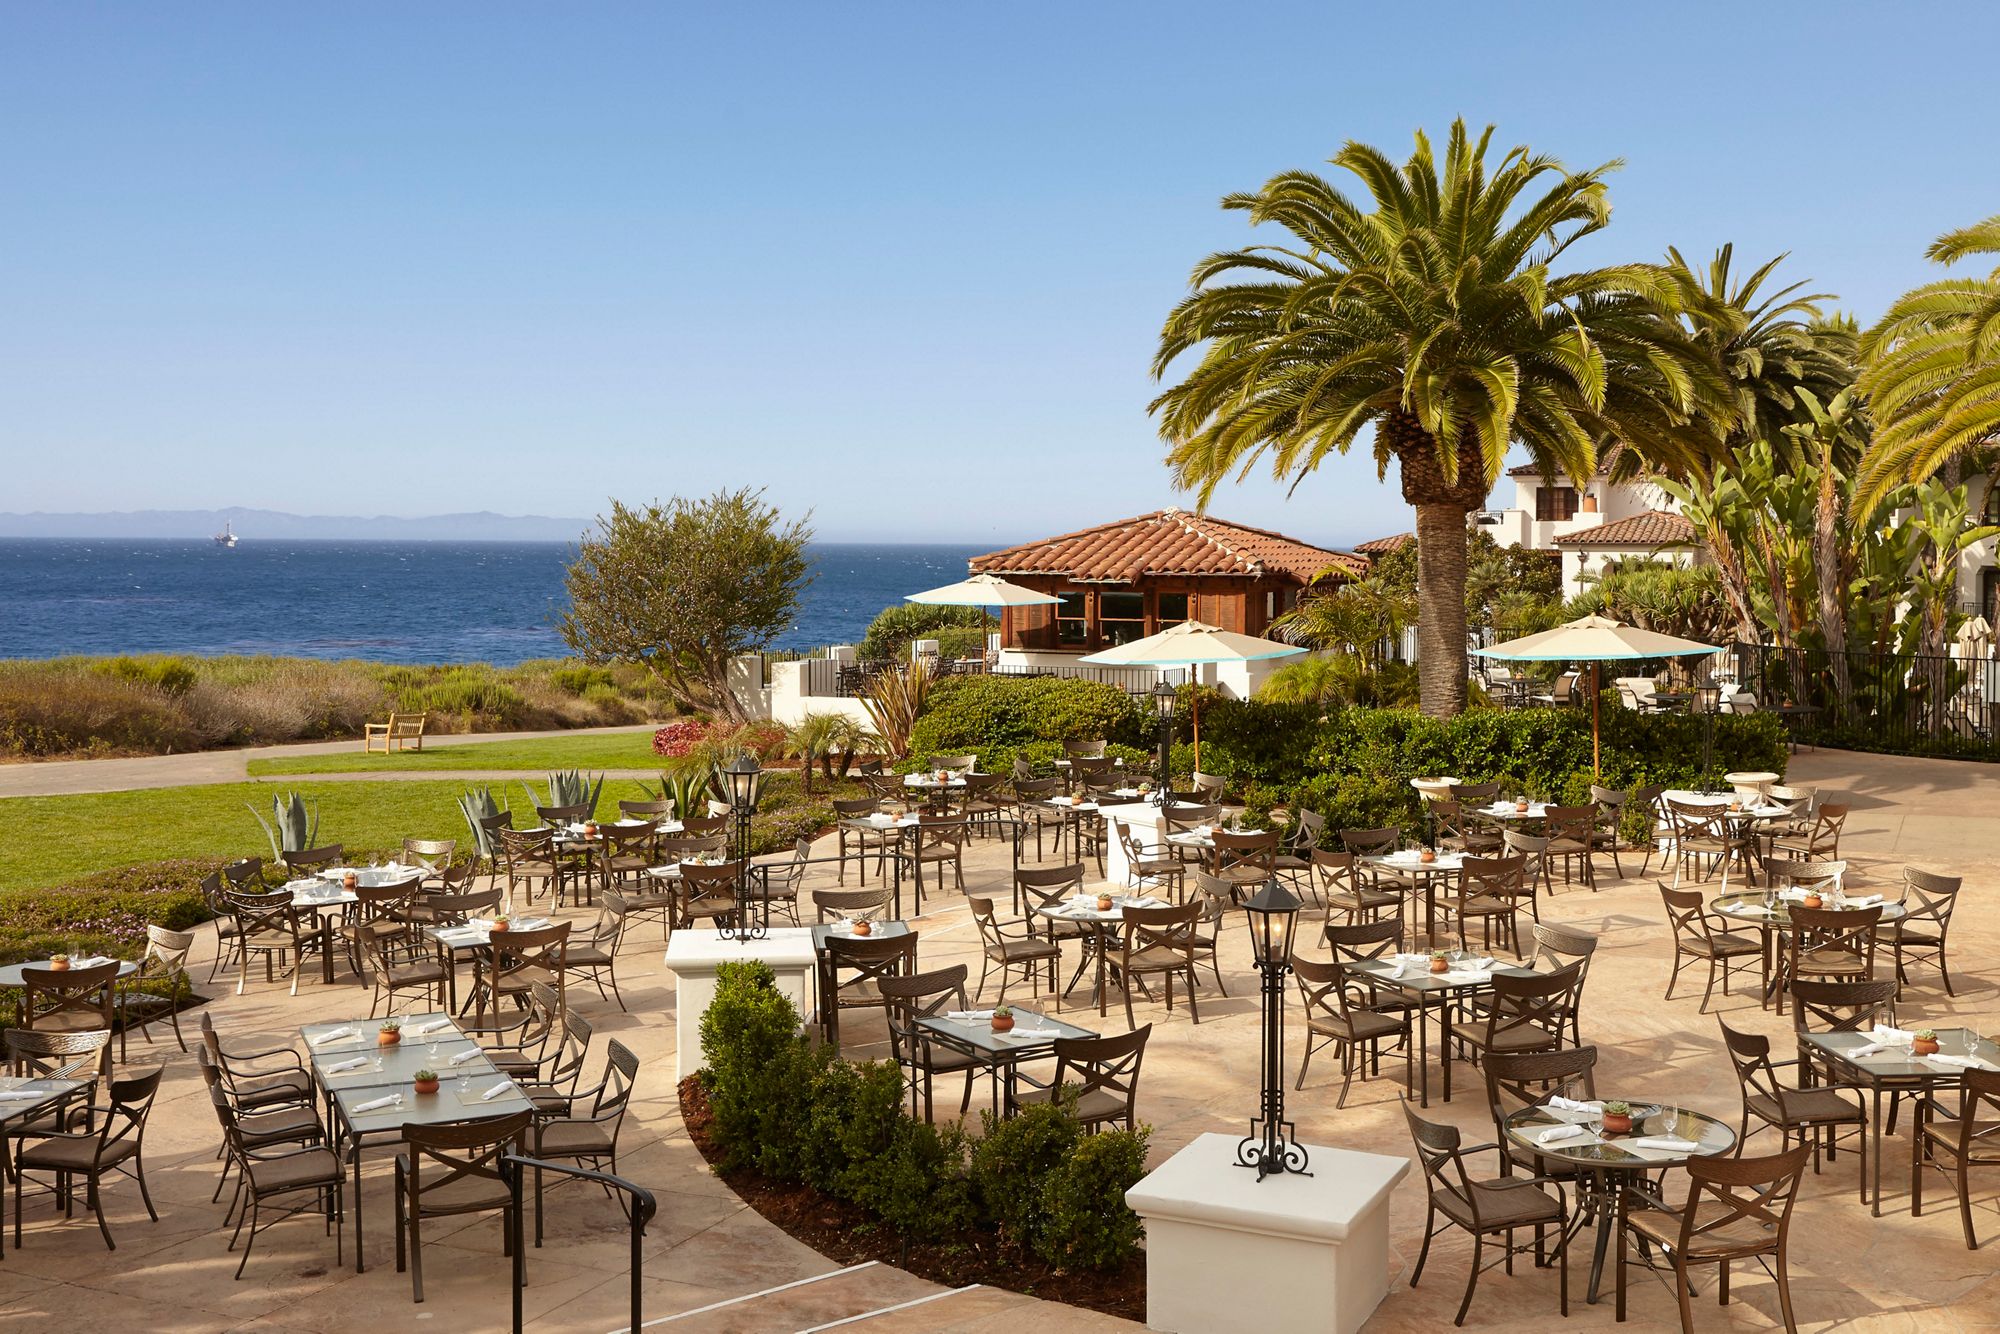 Top 3 Spanish Colonial Style Hotels in Santa Barbara 6